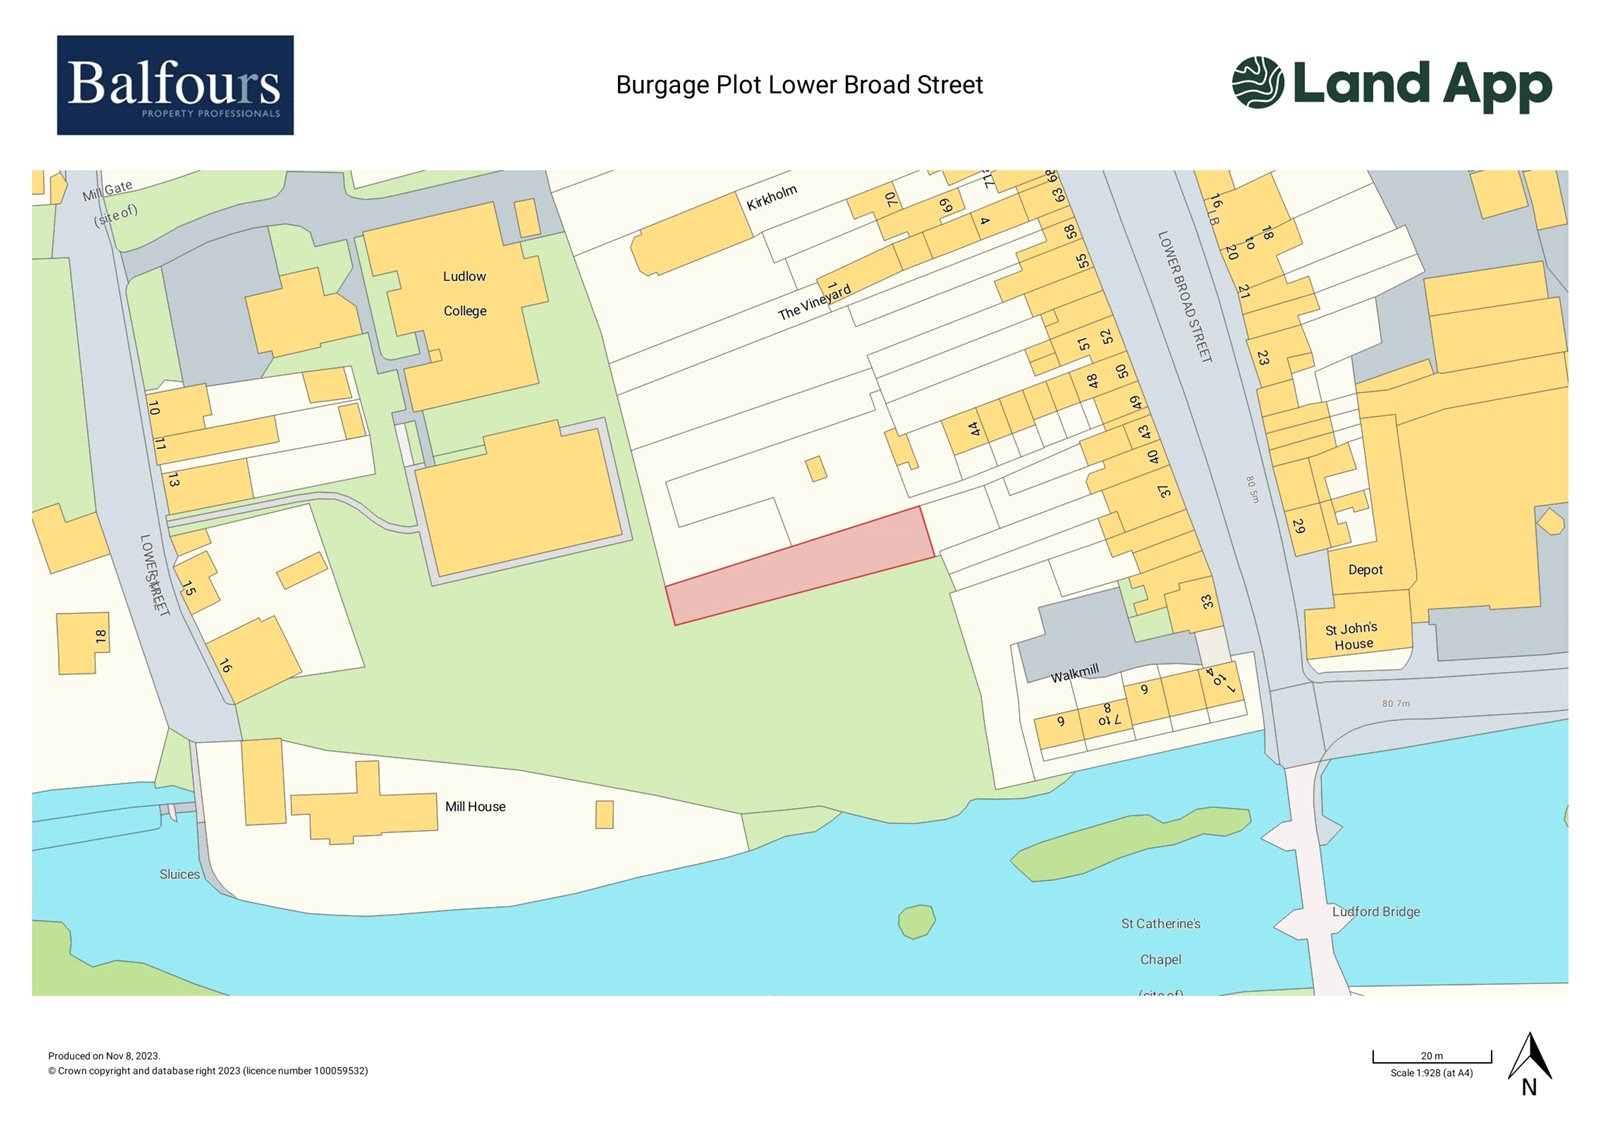 Burgage Plot, Lower Broad Street - Map